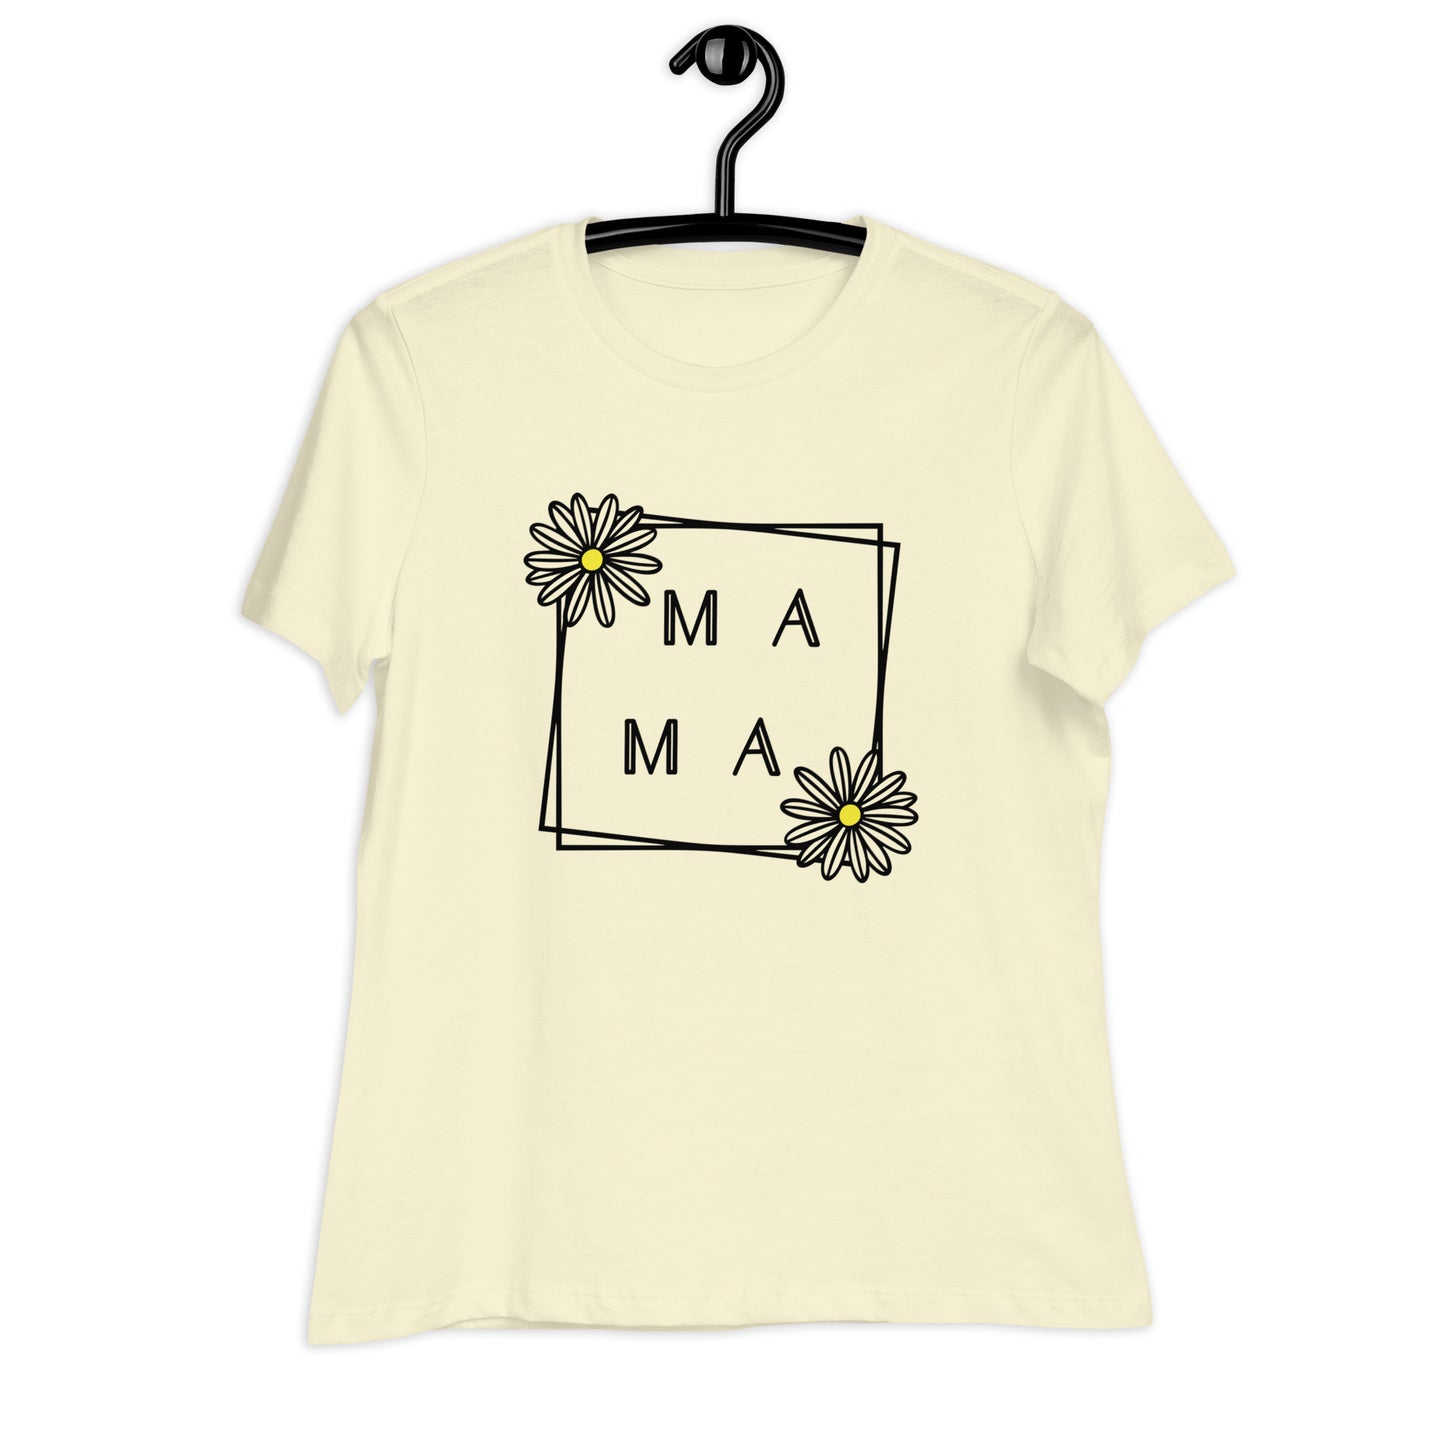 MAMA Women's Relaxed T-Shirt